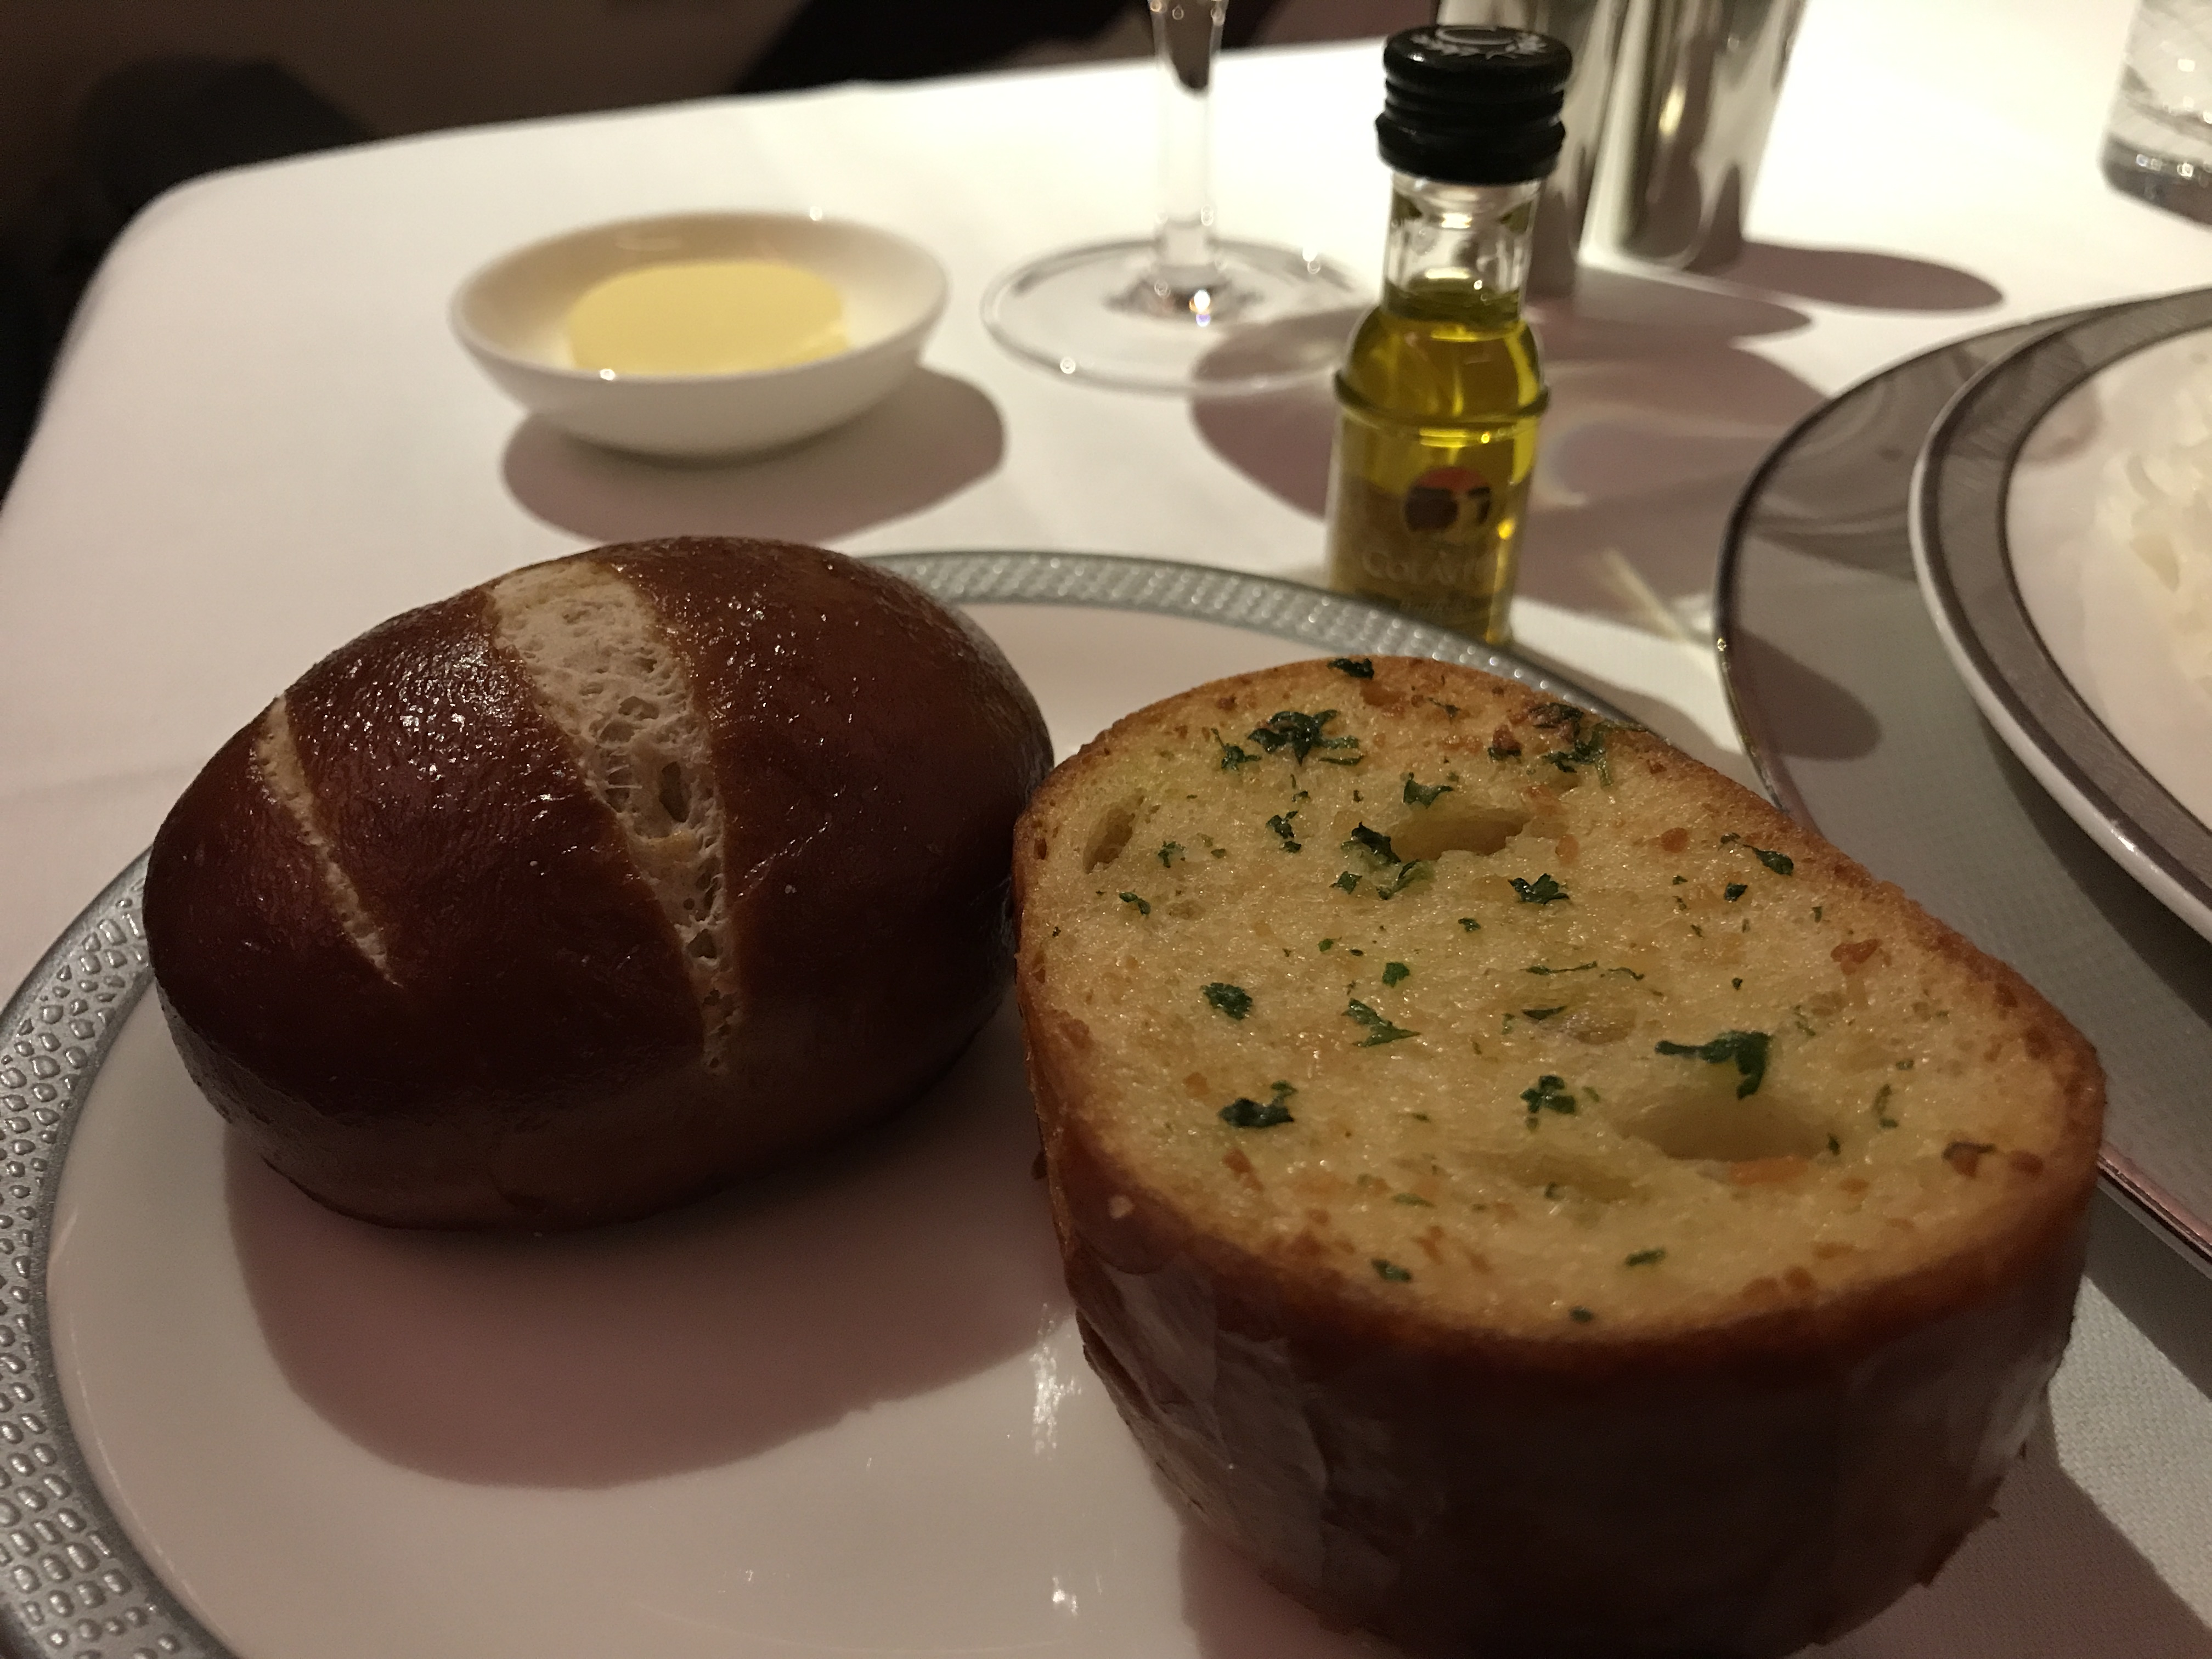 Garlic and Pretzel Bread with lunch